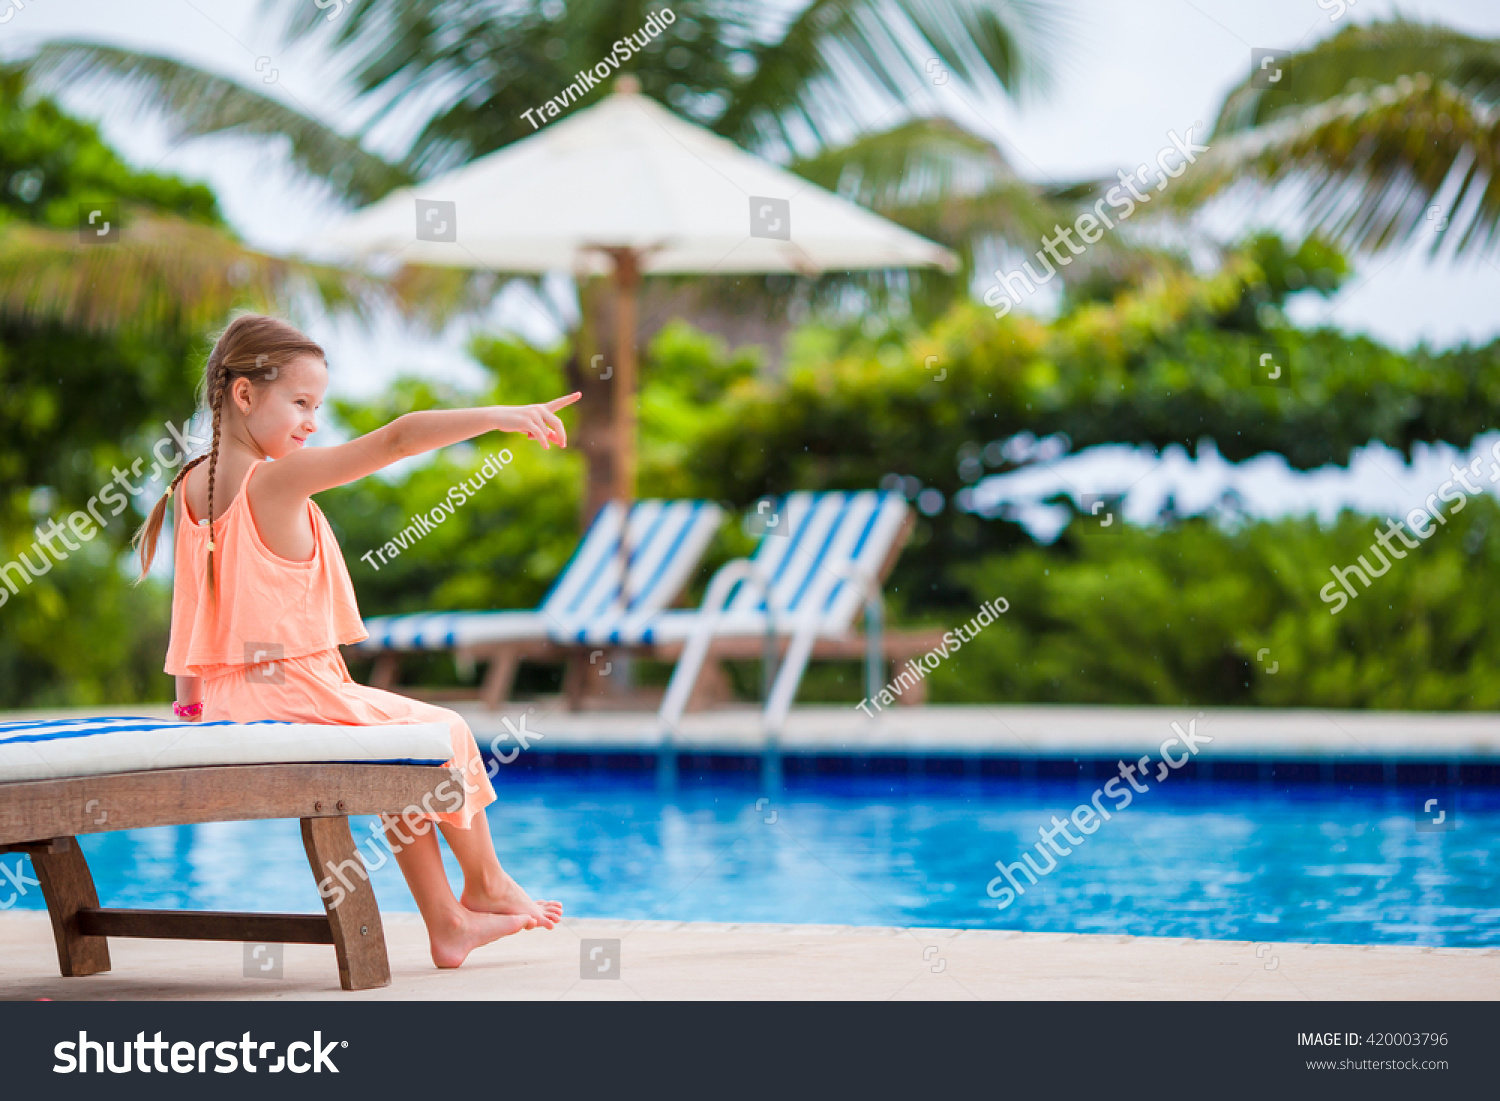 Adorable little girl making selfie near a swimming pool #420003796